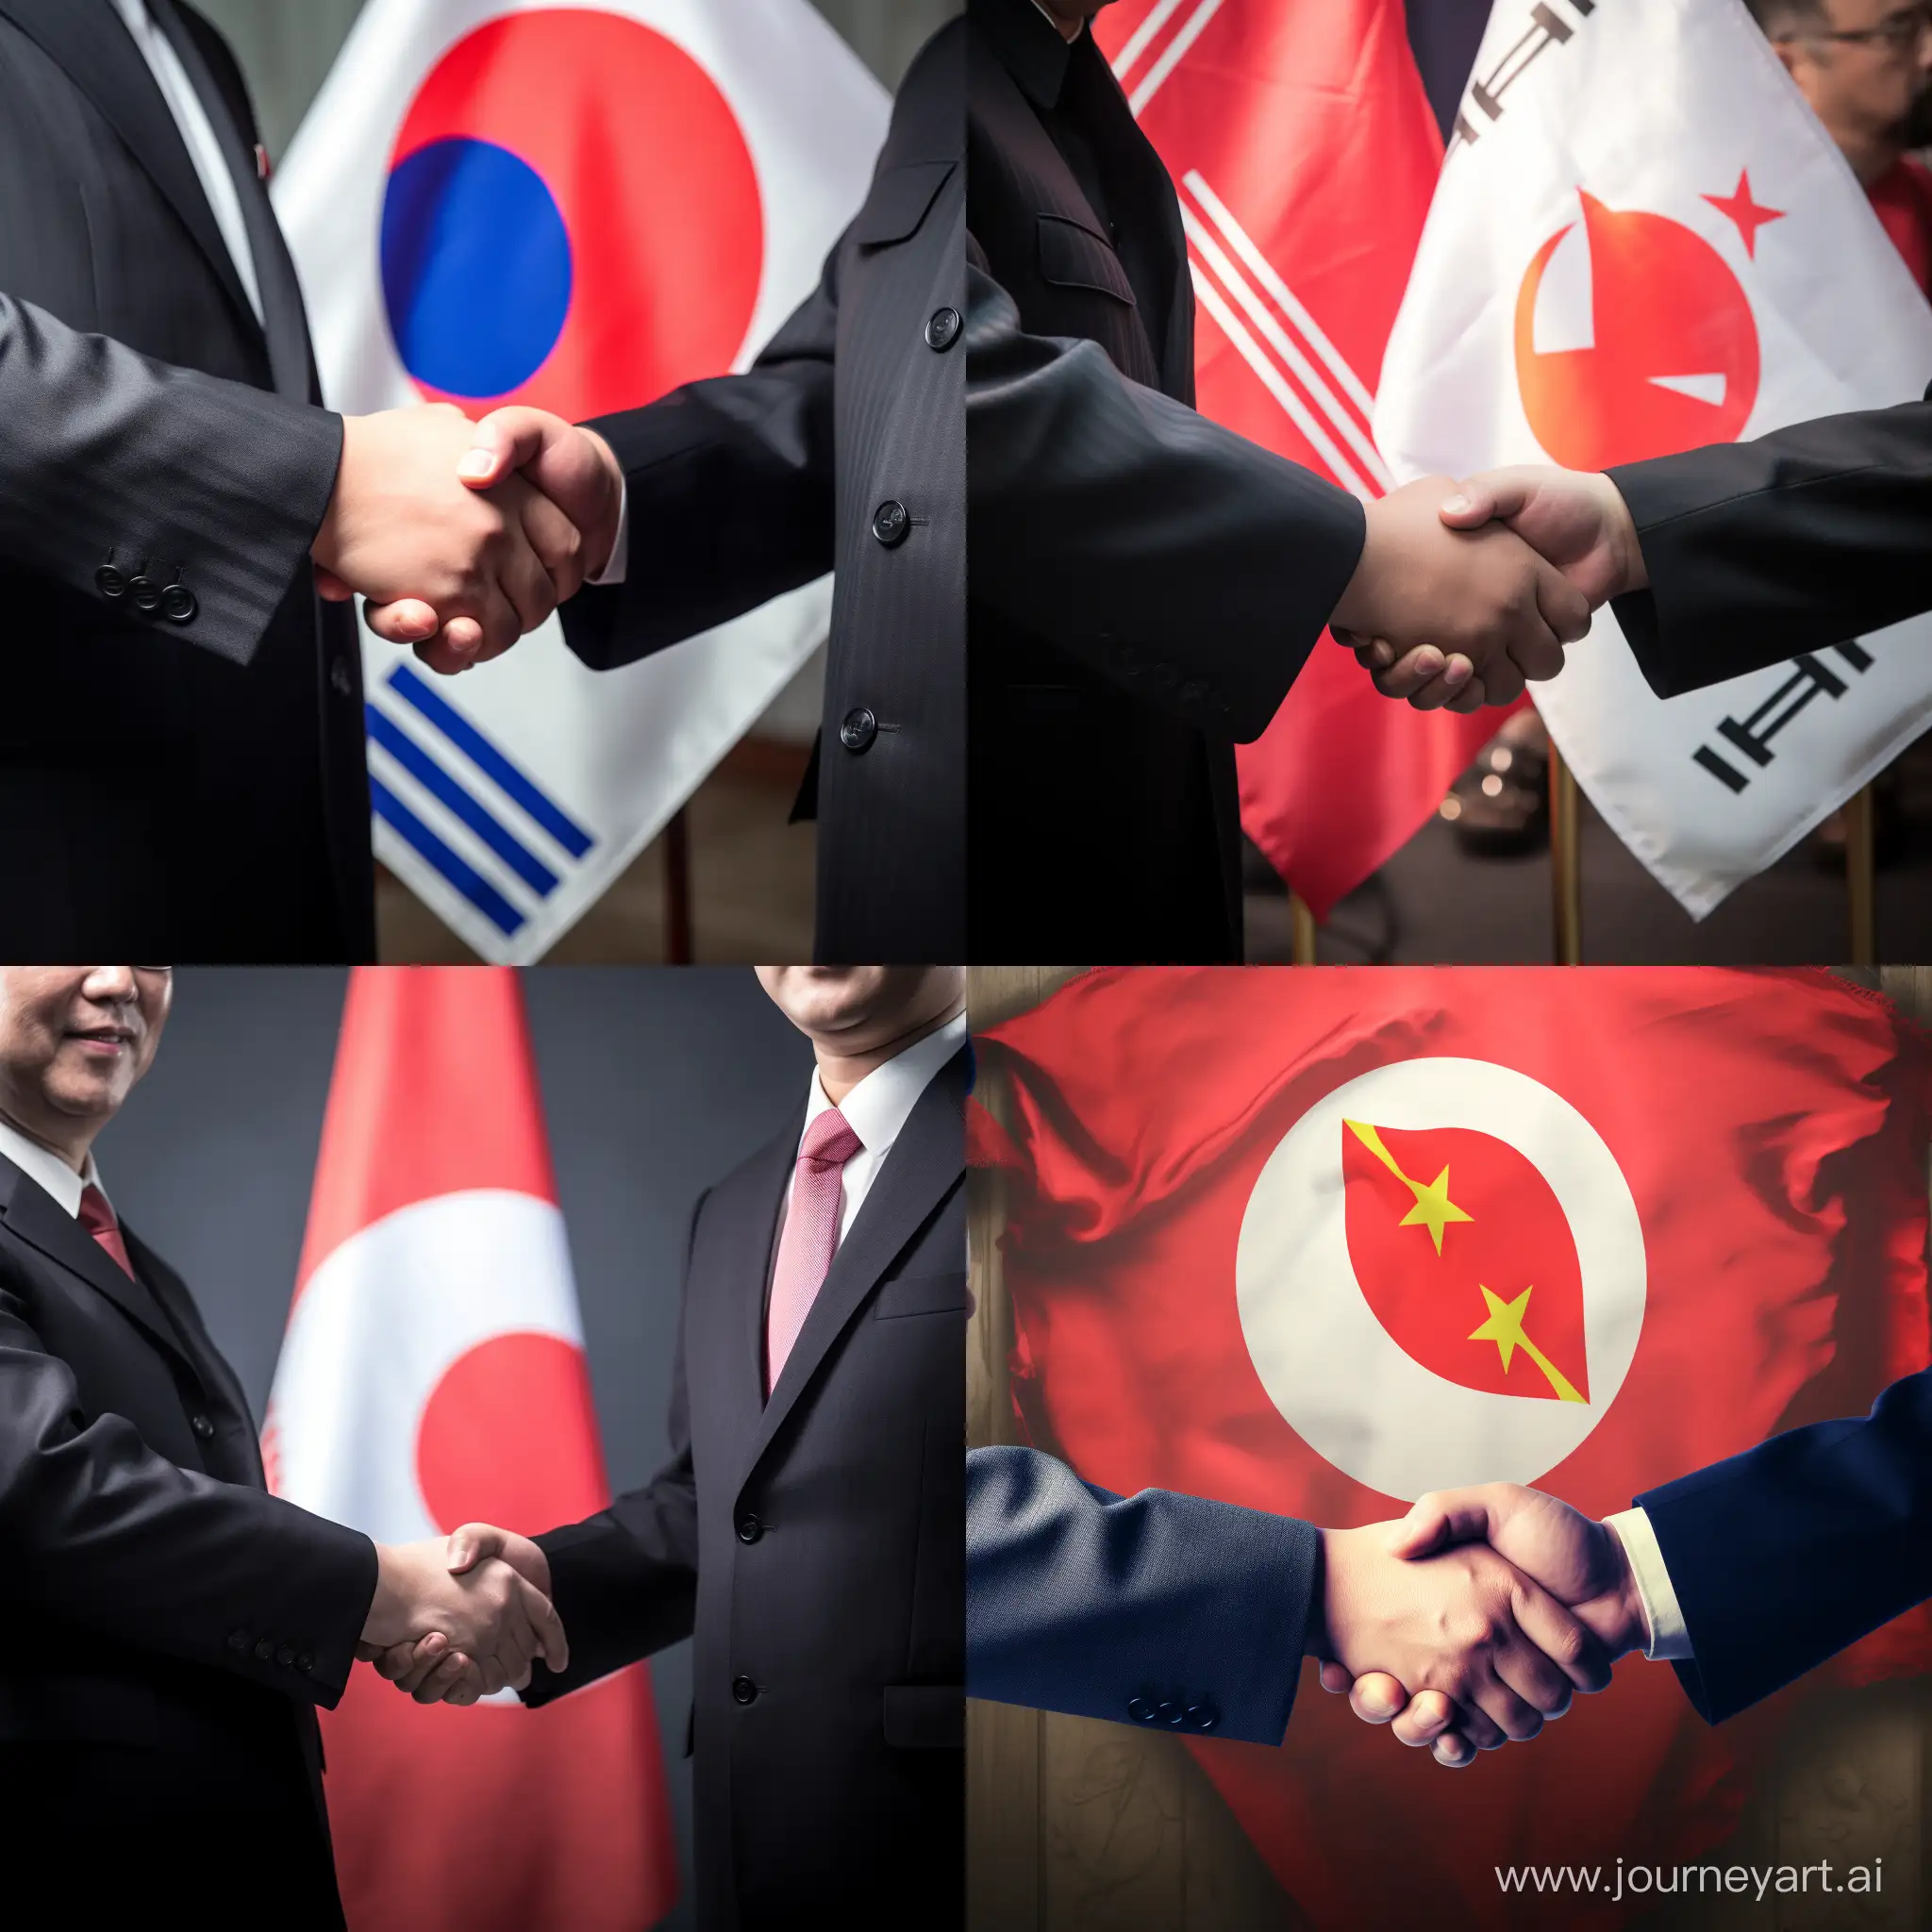 Iran-and-North-Korea-Flags-Shaking-Hands-Diplomatically